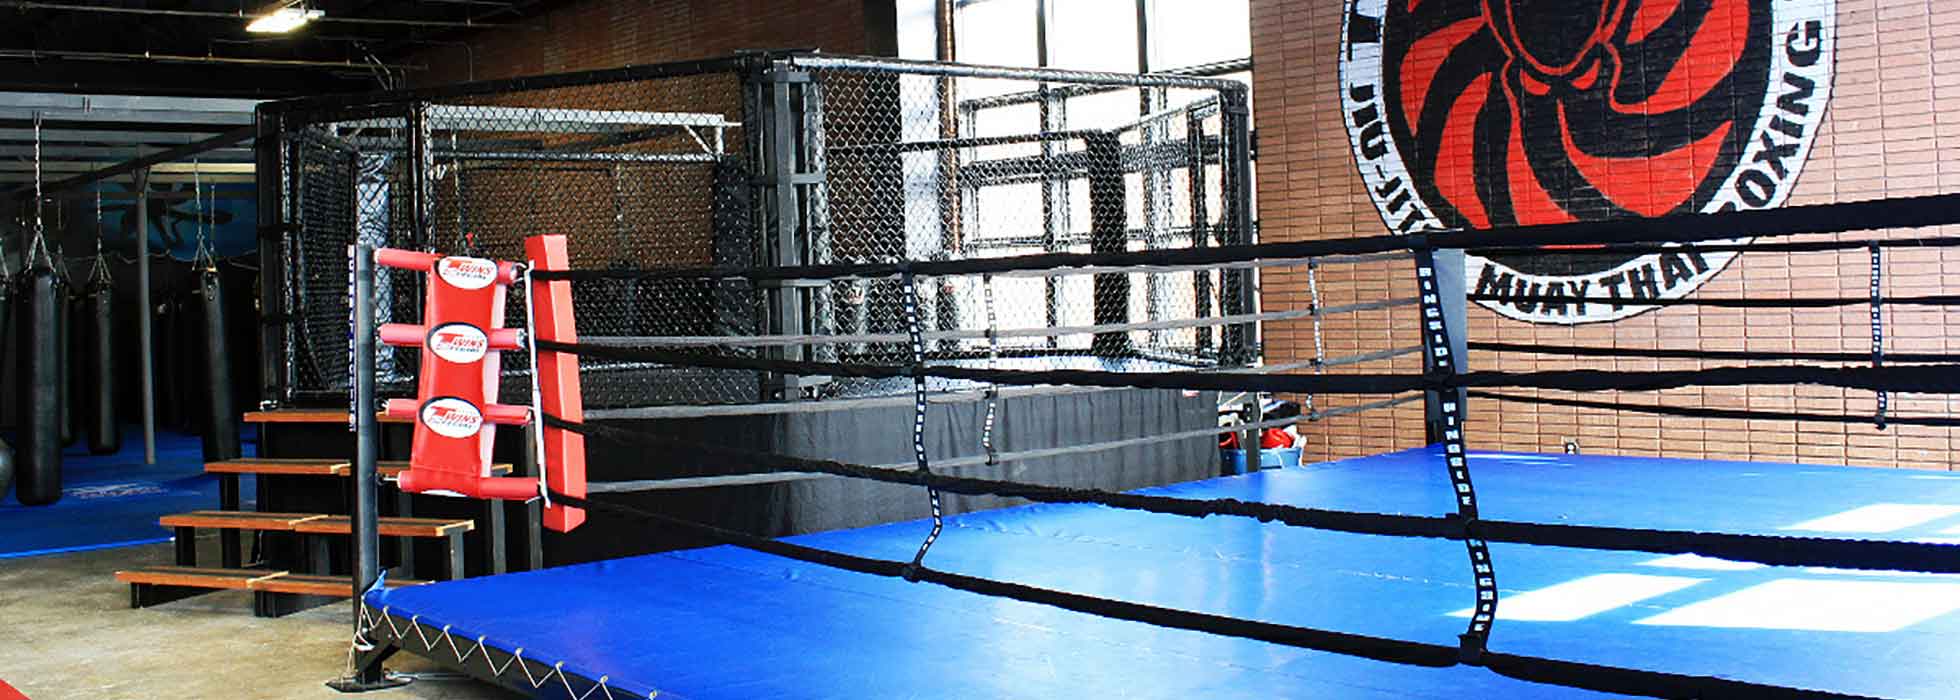 Boxing Gym near Atlanta GA, Boxing Gym near Cartersville GA, Boxing Gym near Chamblee GA, Boxing Gym near Midtown Atlanta GA, Boxing Gym near Sandy Springs GA, Boxing Gym near Dacula GA